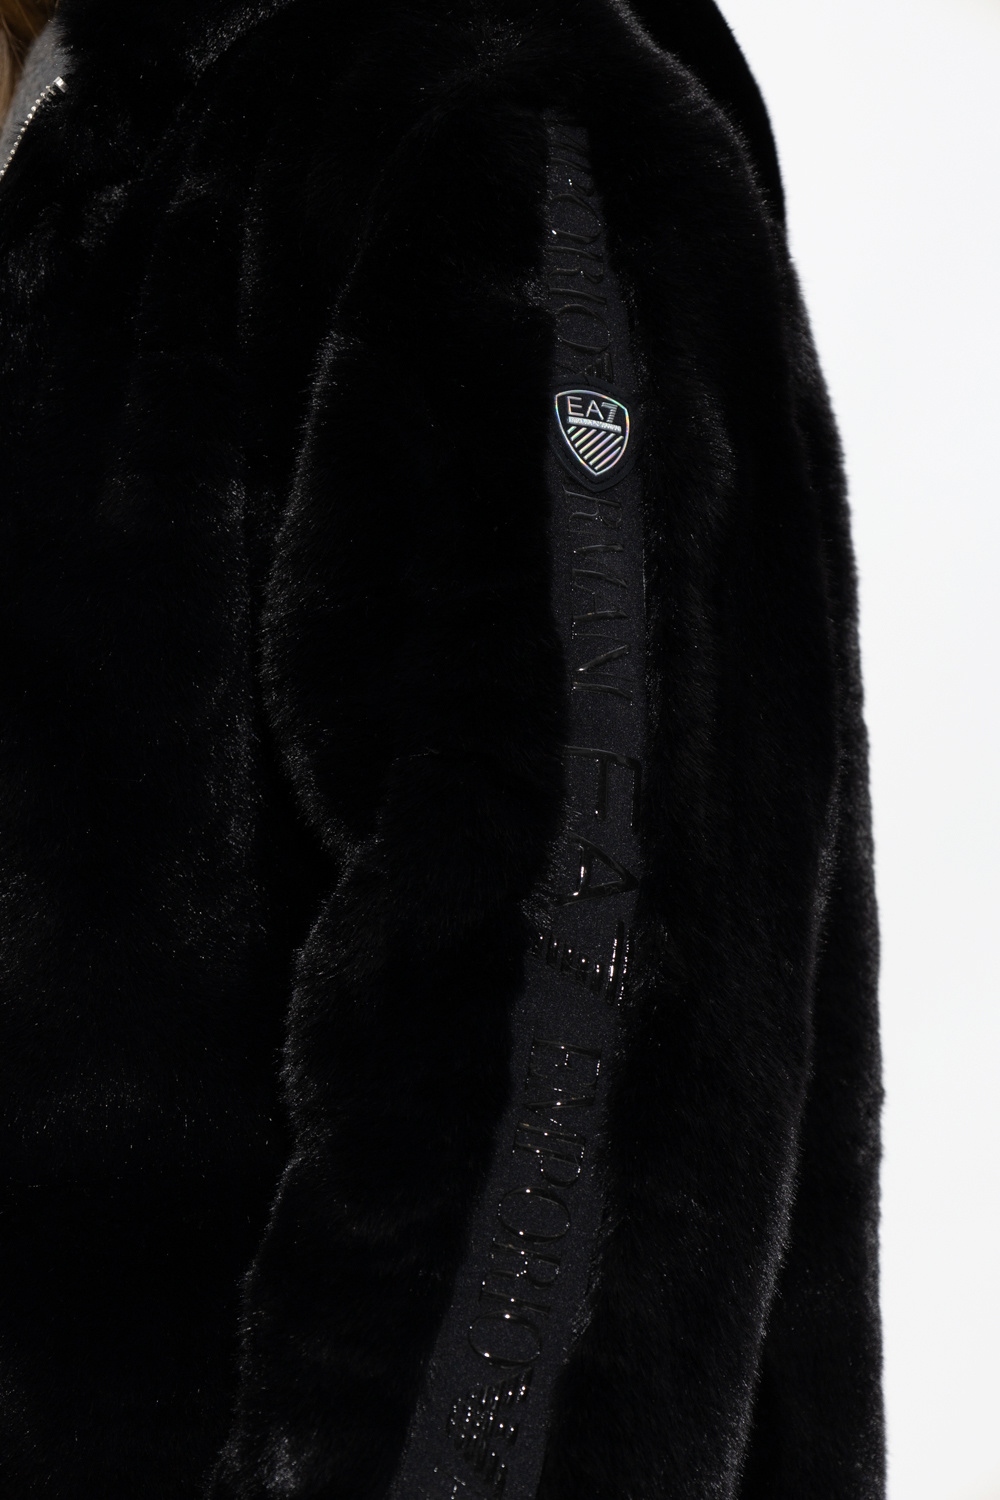 EA7 Emporio Armani Faux fur jacket | Women's Clothing | Vitkac